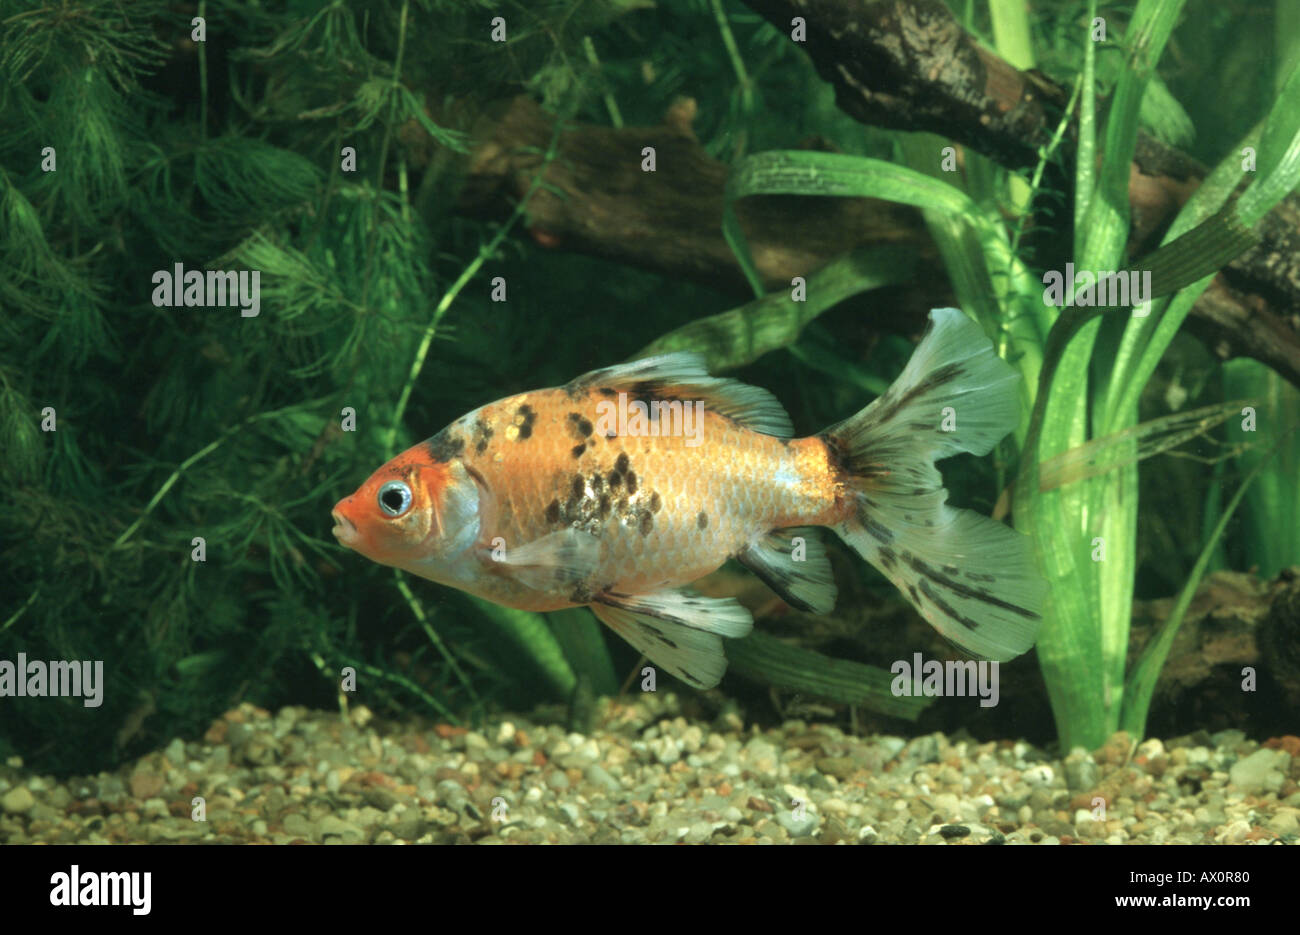 goldfish, common carp (Carassius auratus), Shubunkin breeding form Stock Photo